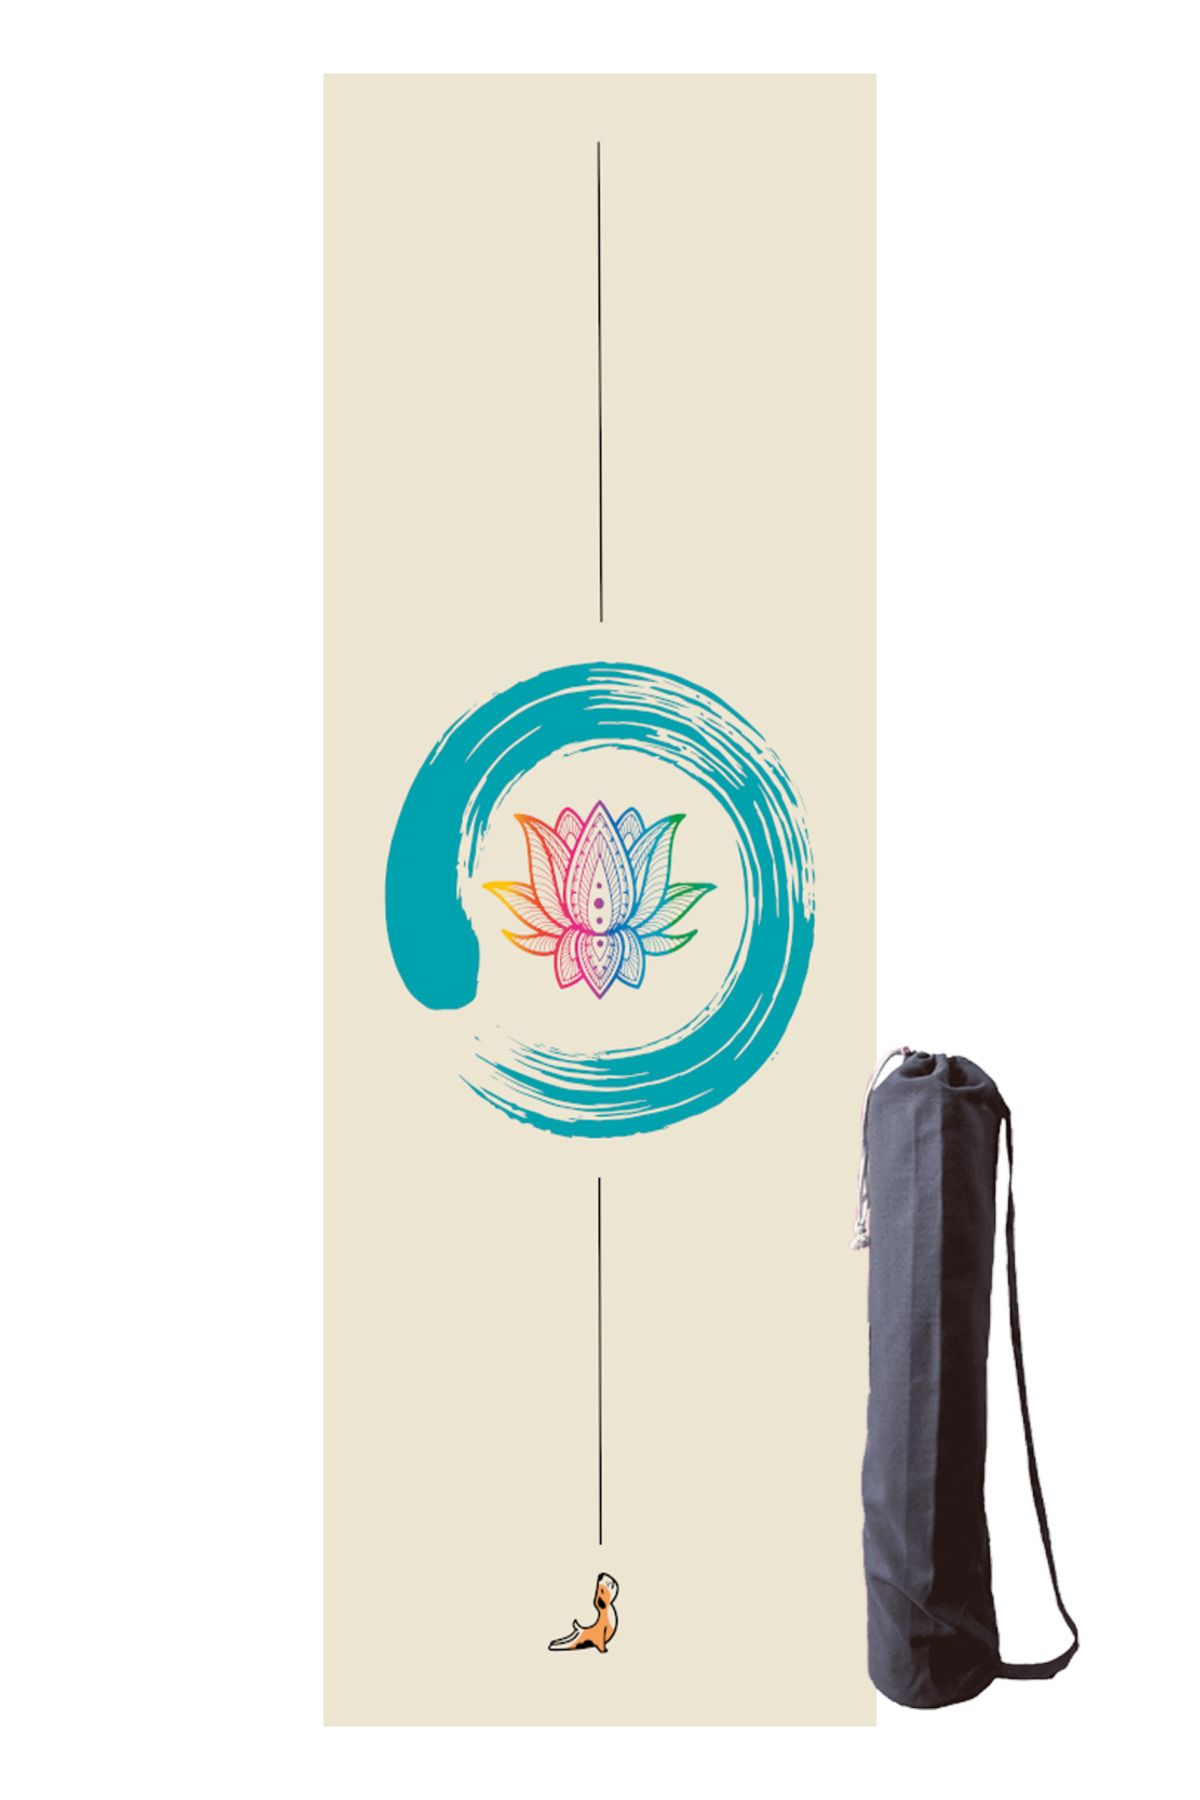 PETARYA Reflect Series 4.1 mm Enso Lotus Doğal Kauçuk Kaydırmaz Yoga Matı